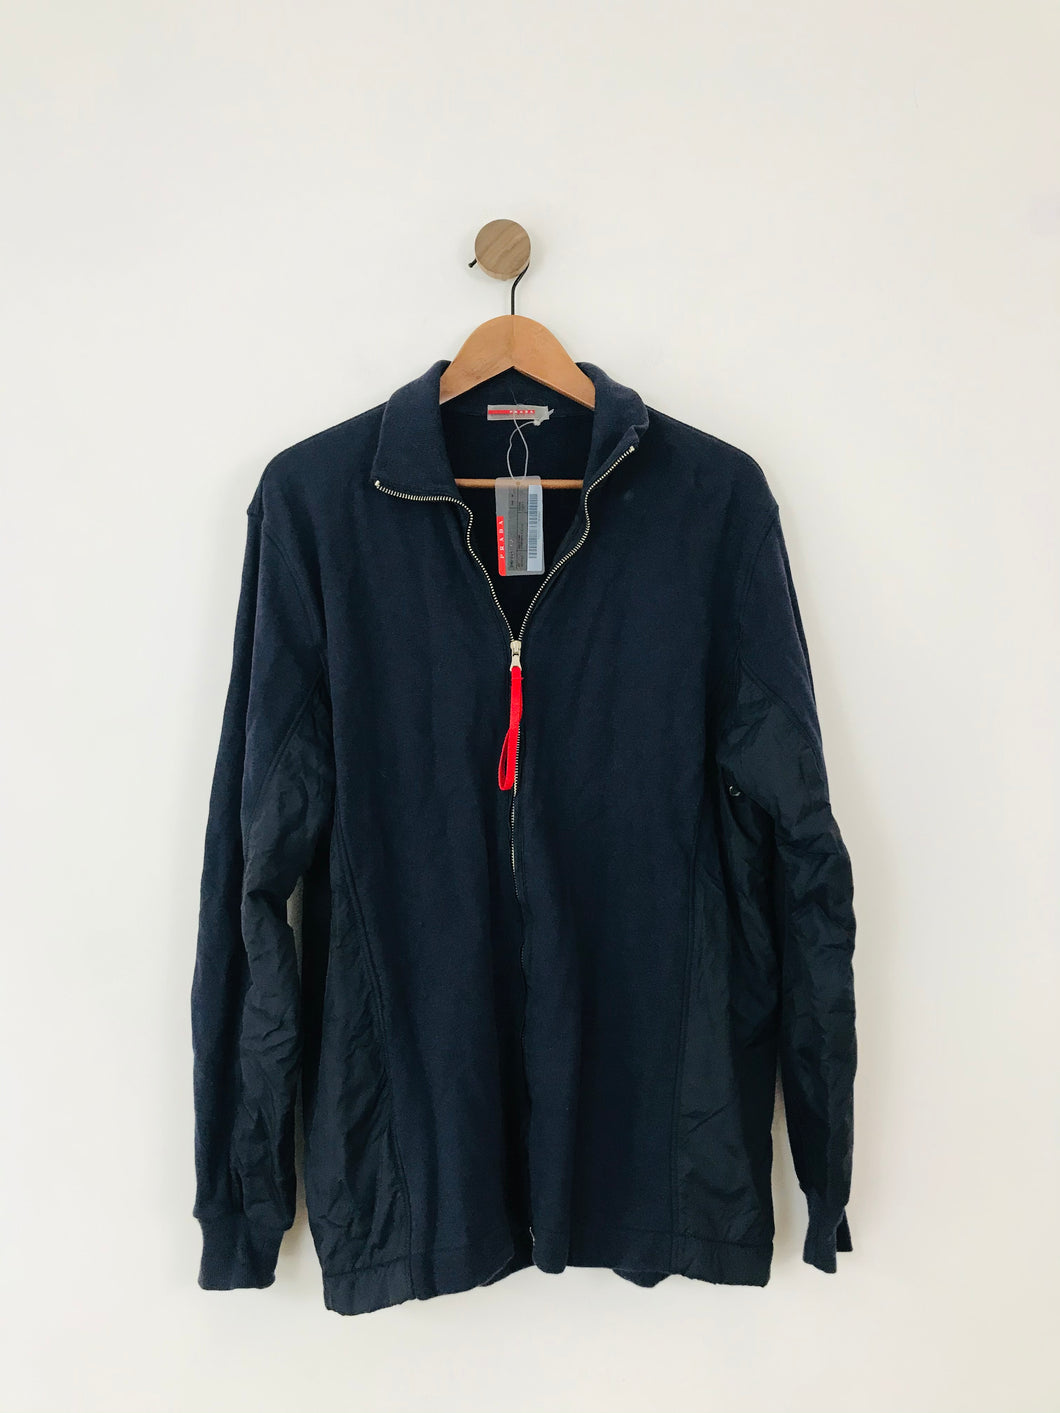 Prada Men’s Full Zip Sports Jacket With Tags | M | Navy Blue